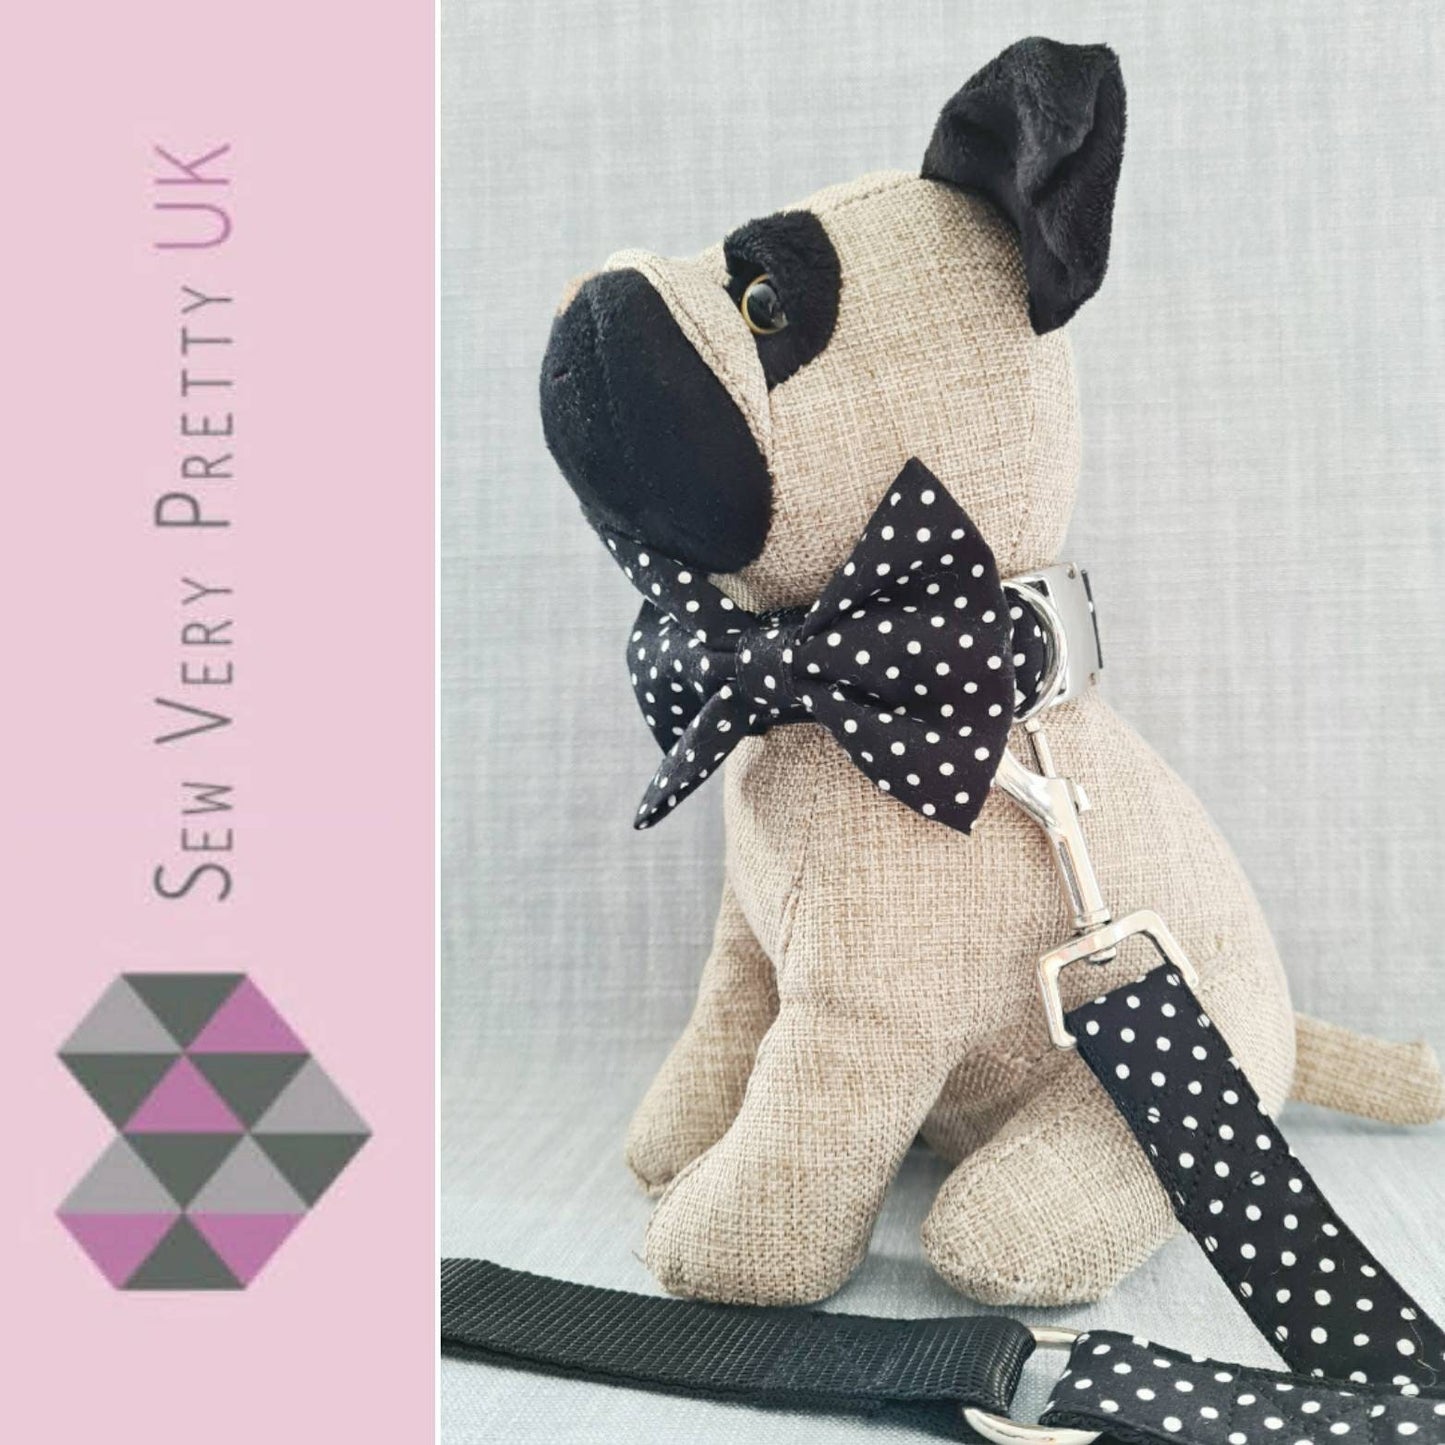 Black and white polka dot dog collar